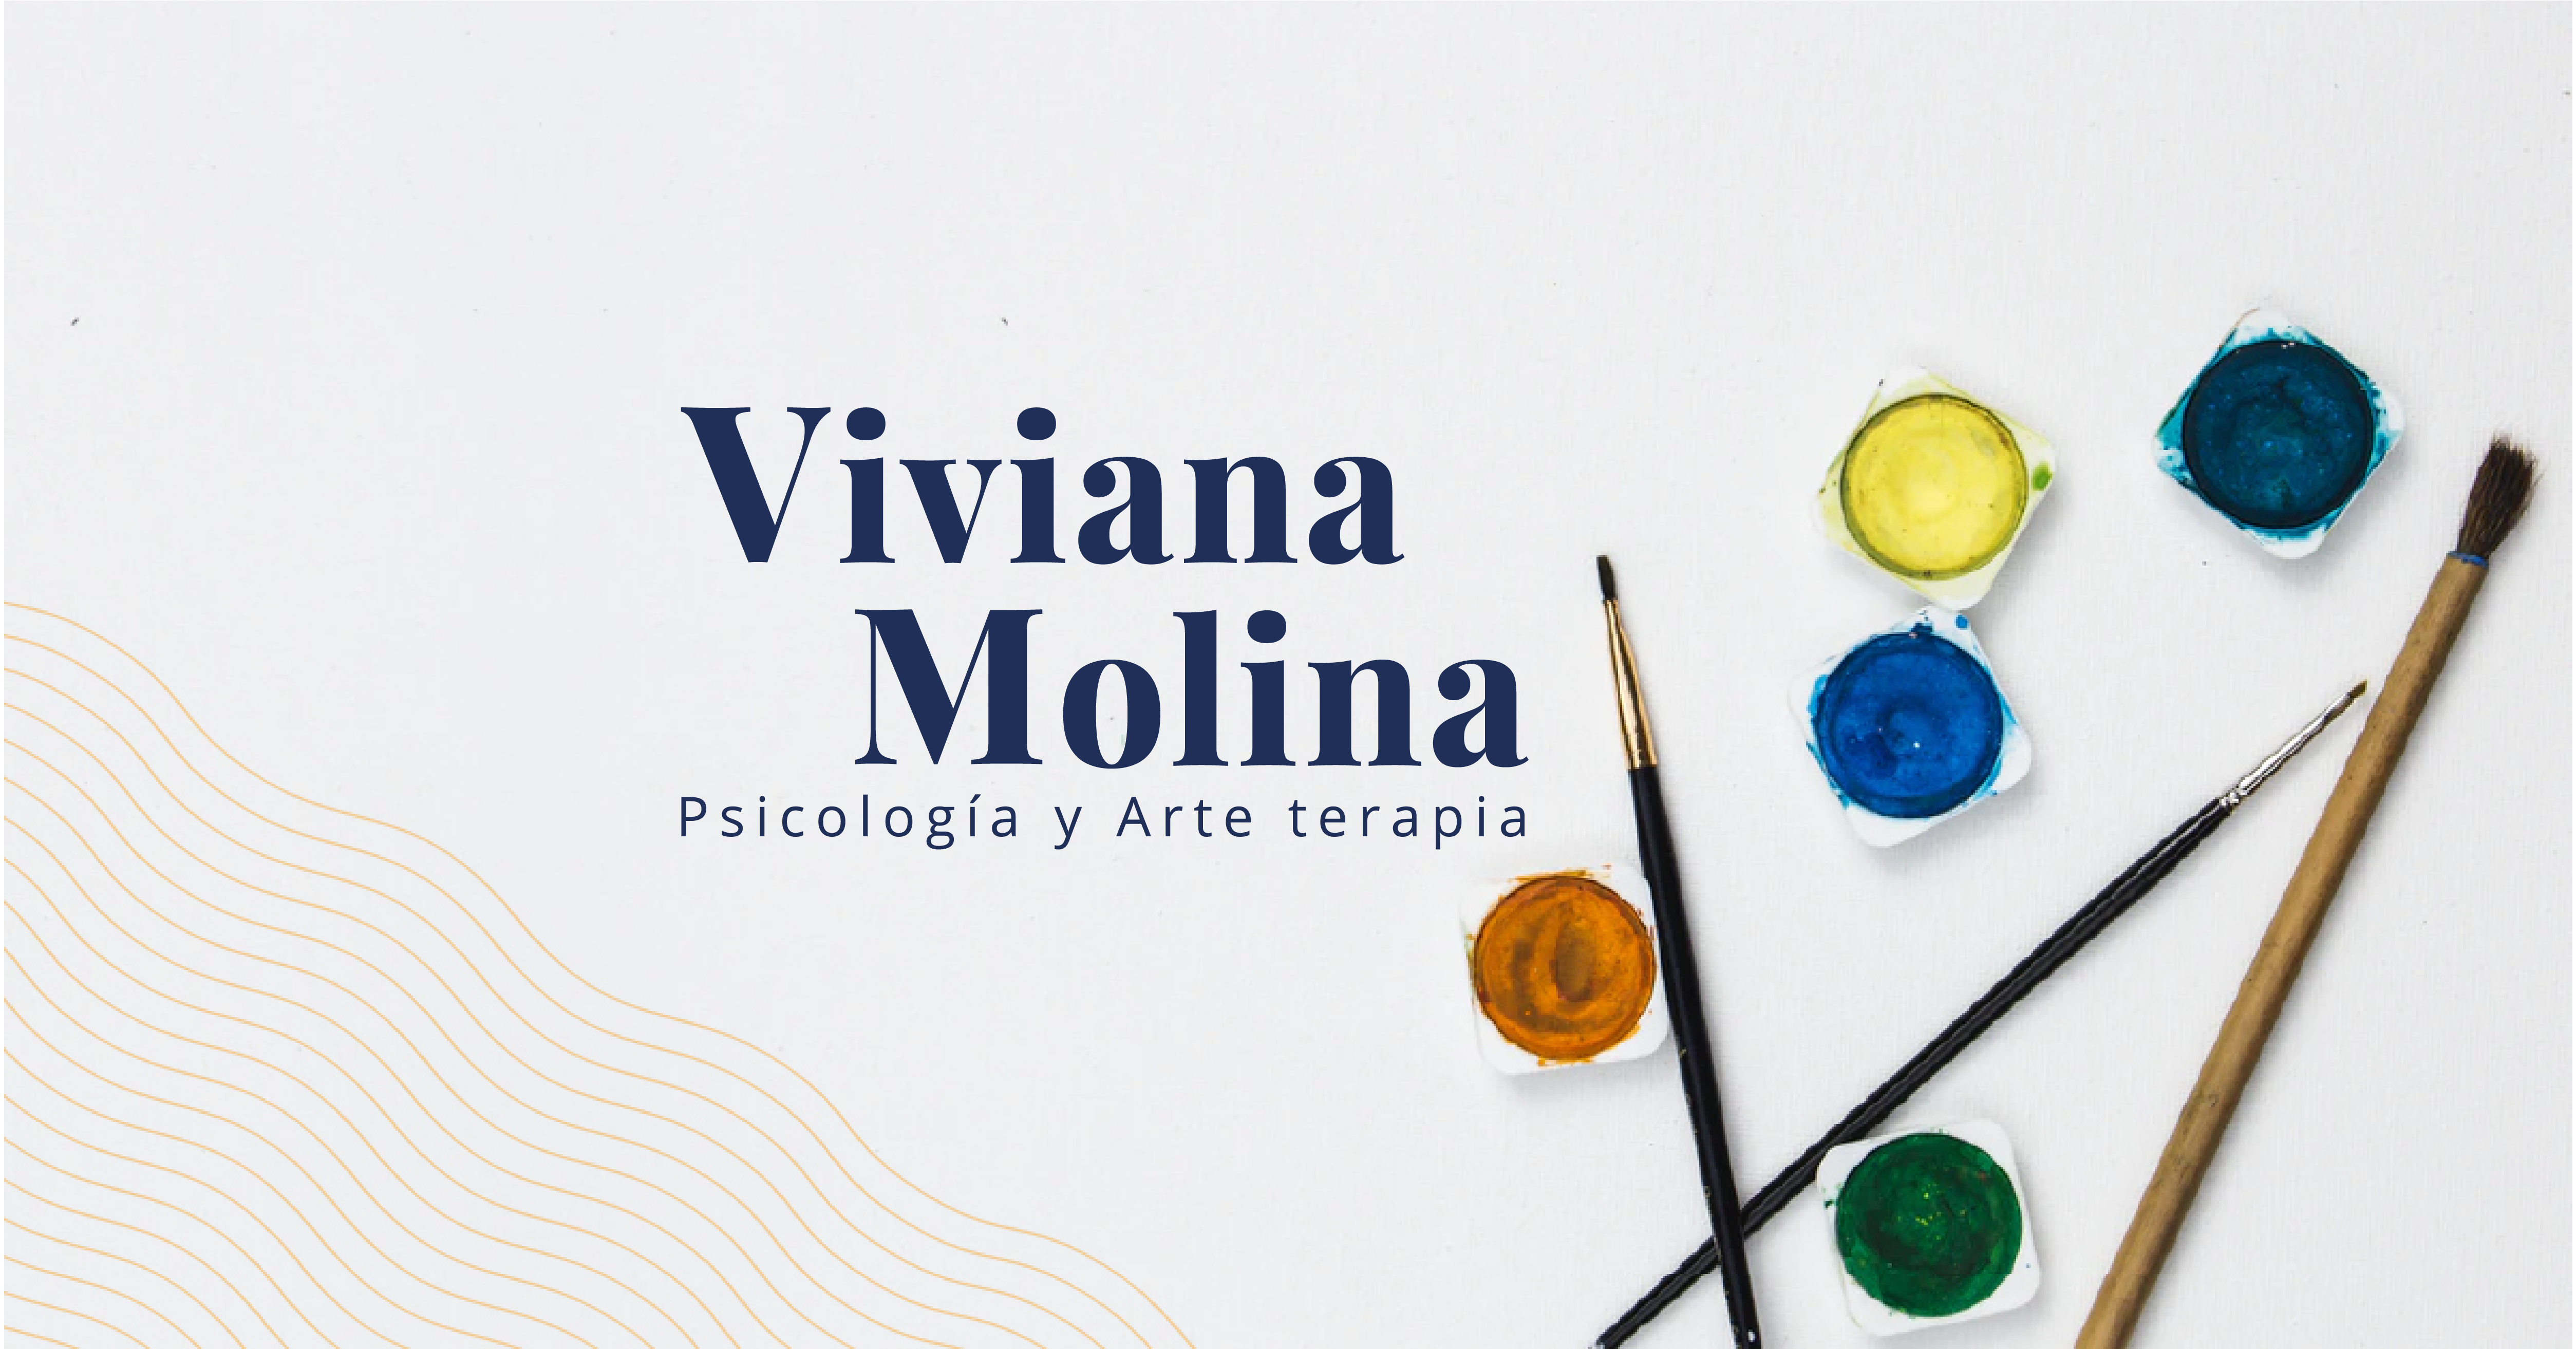 viviana molina psicologia y arte terapia - home banner